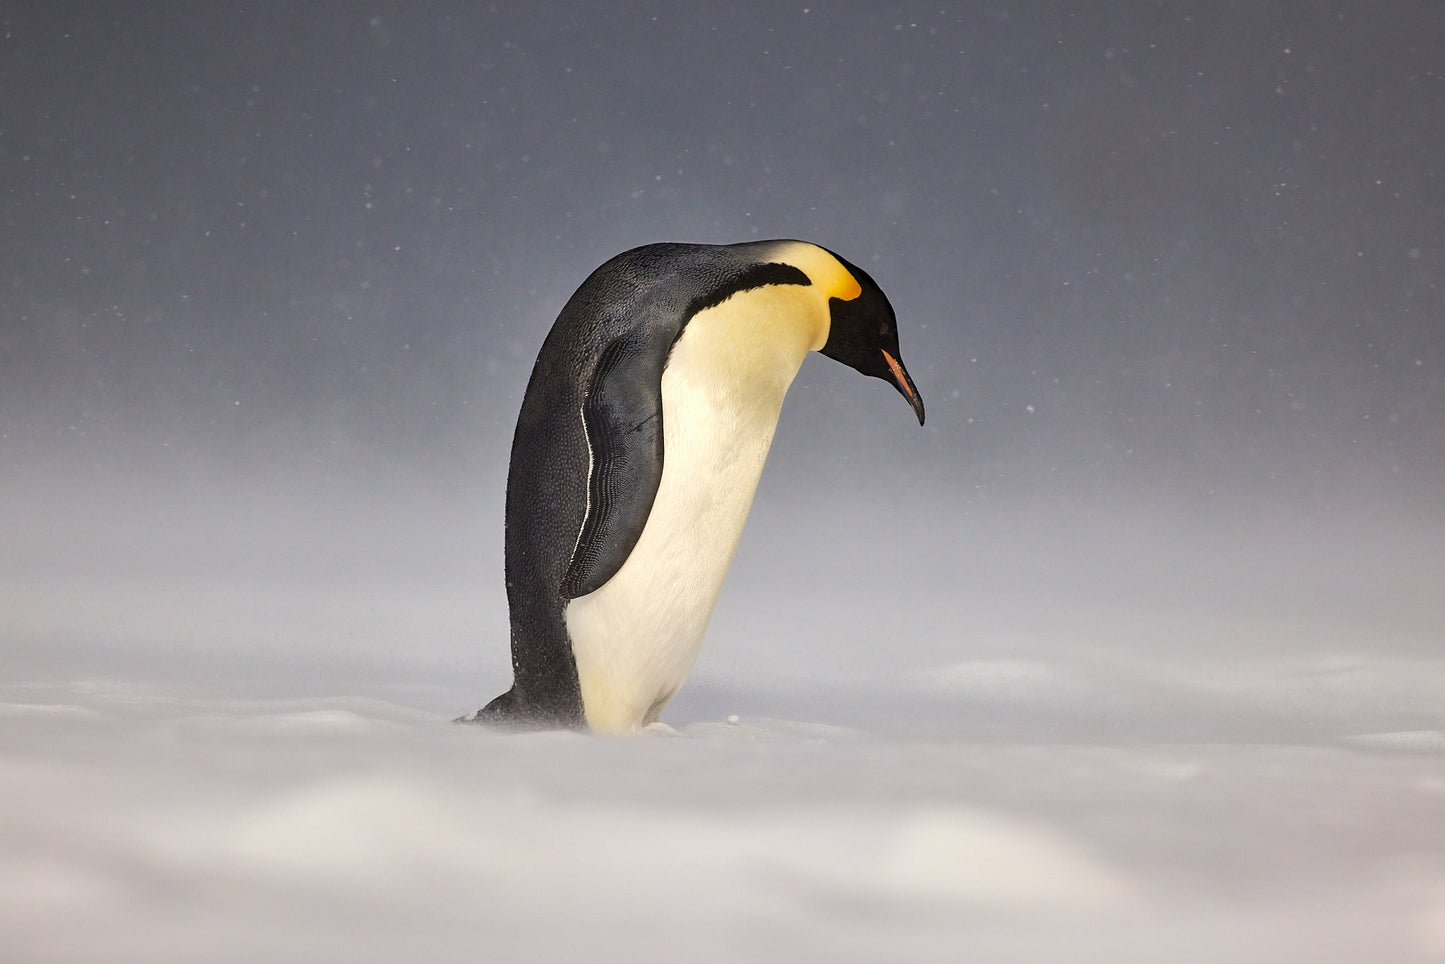 Snow fall - Emperor Penguin, Ross Sea Antarctica